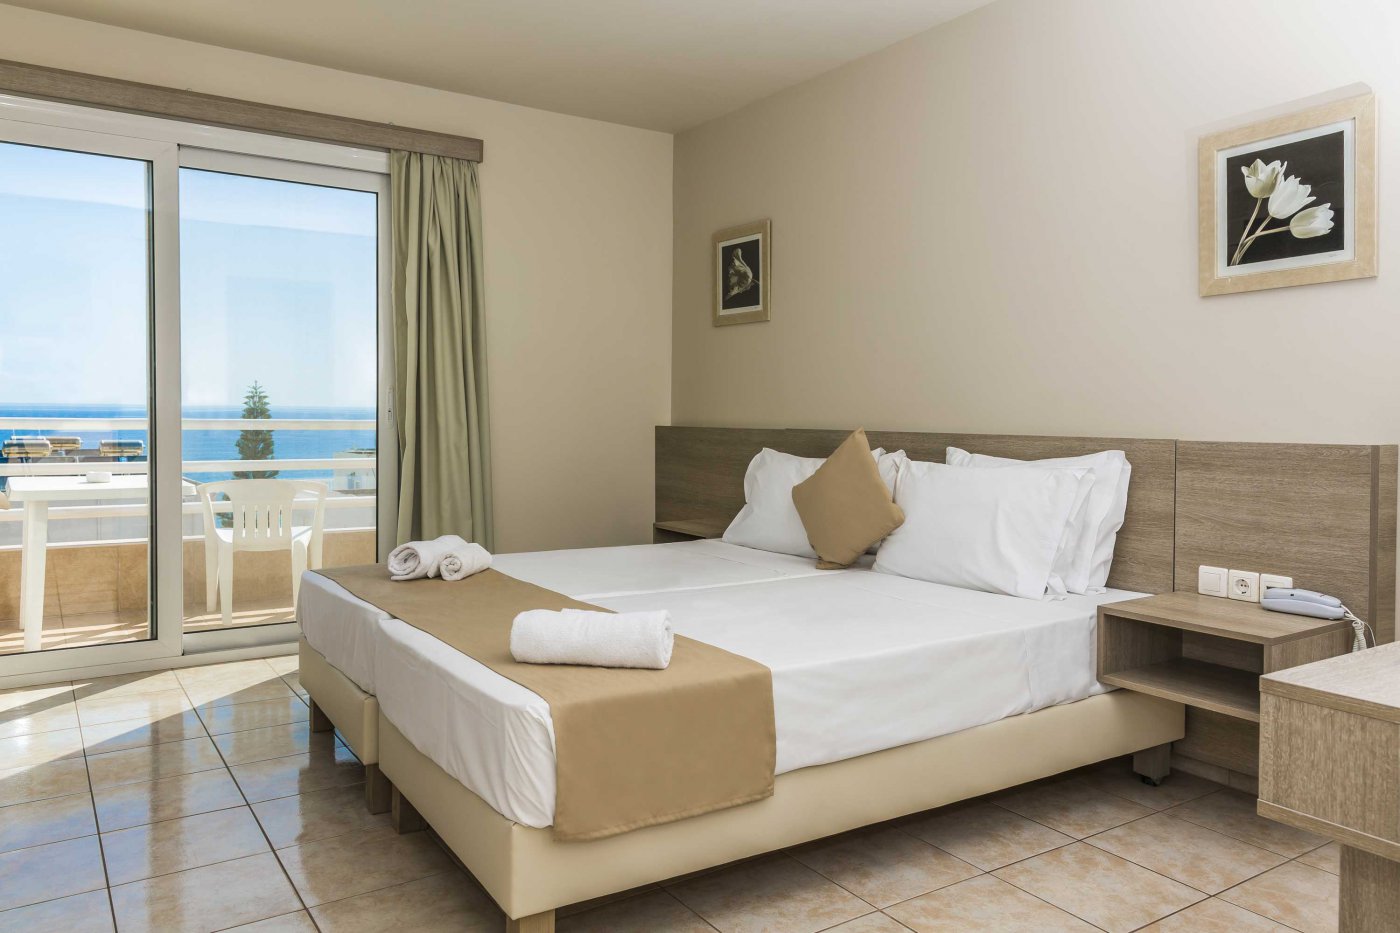 Номер Standard Room Sea View отеля Porto Greco Village 4* (Порто Греко Вилладж 4*)